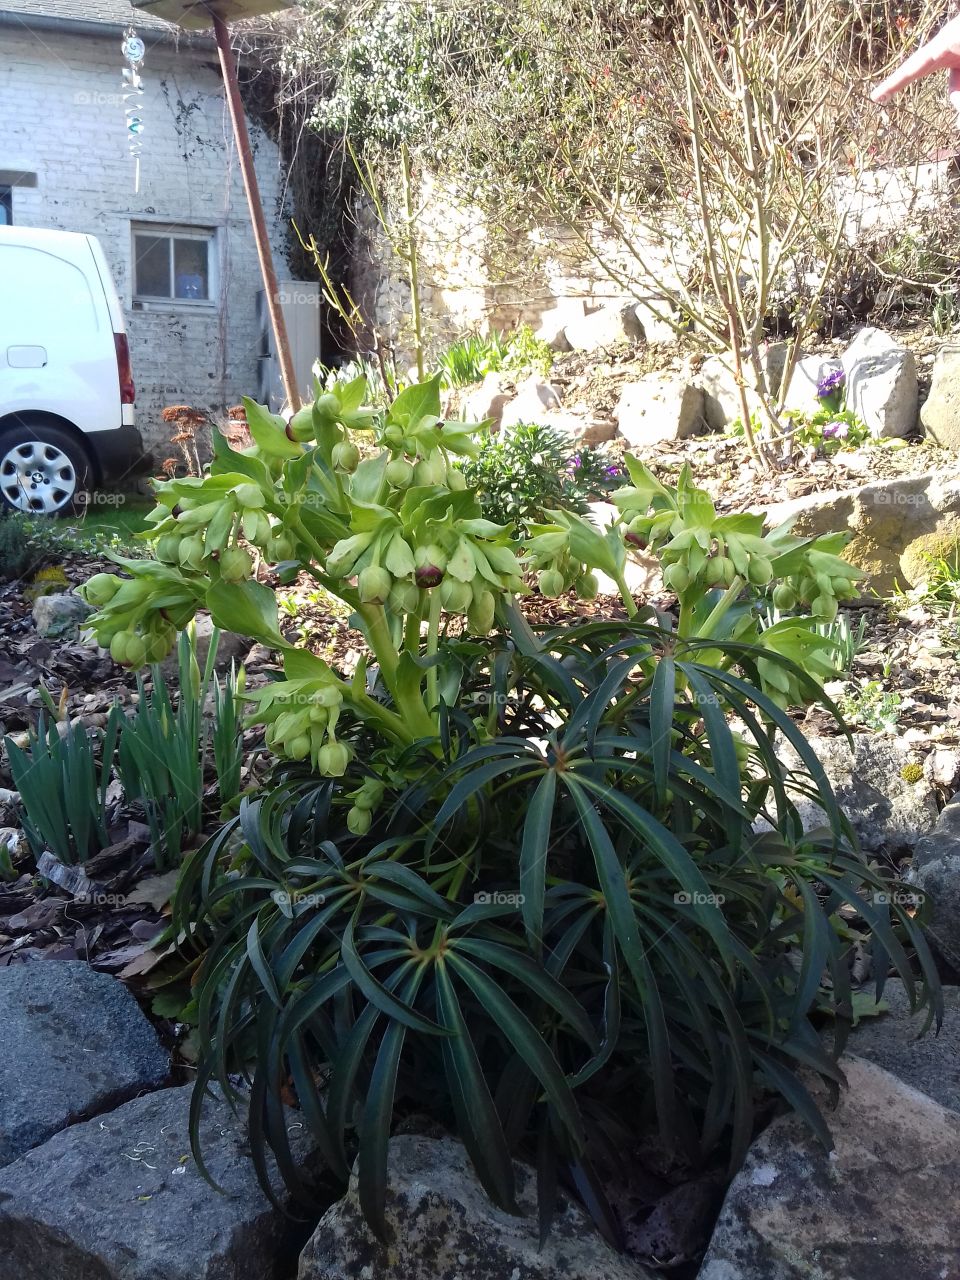 elebore plants good for the backyard